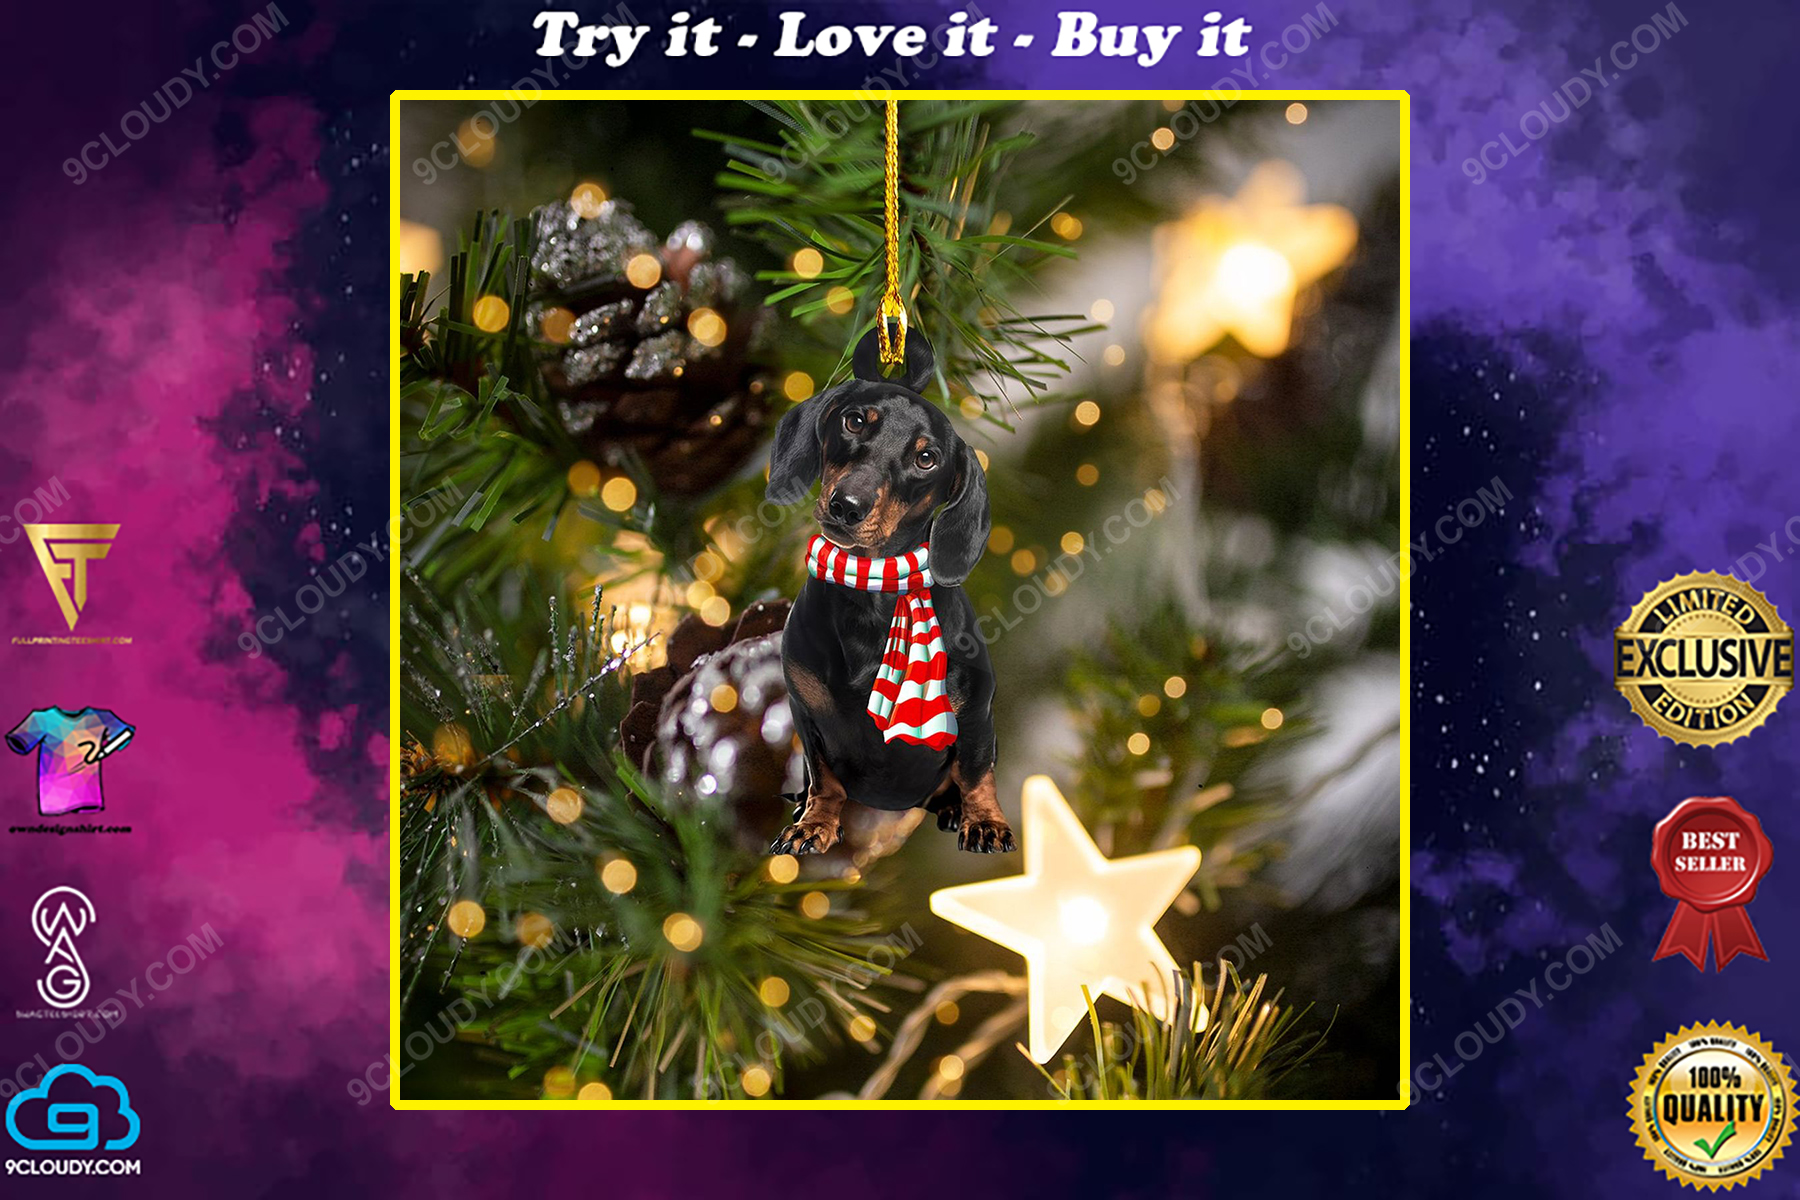 Dog lover dachshund christmas gift ornament